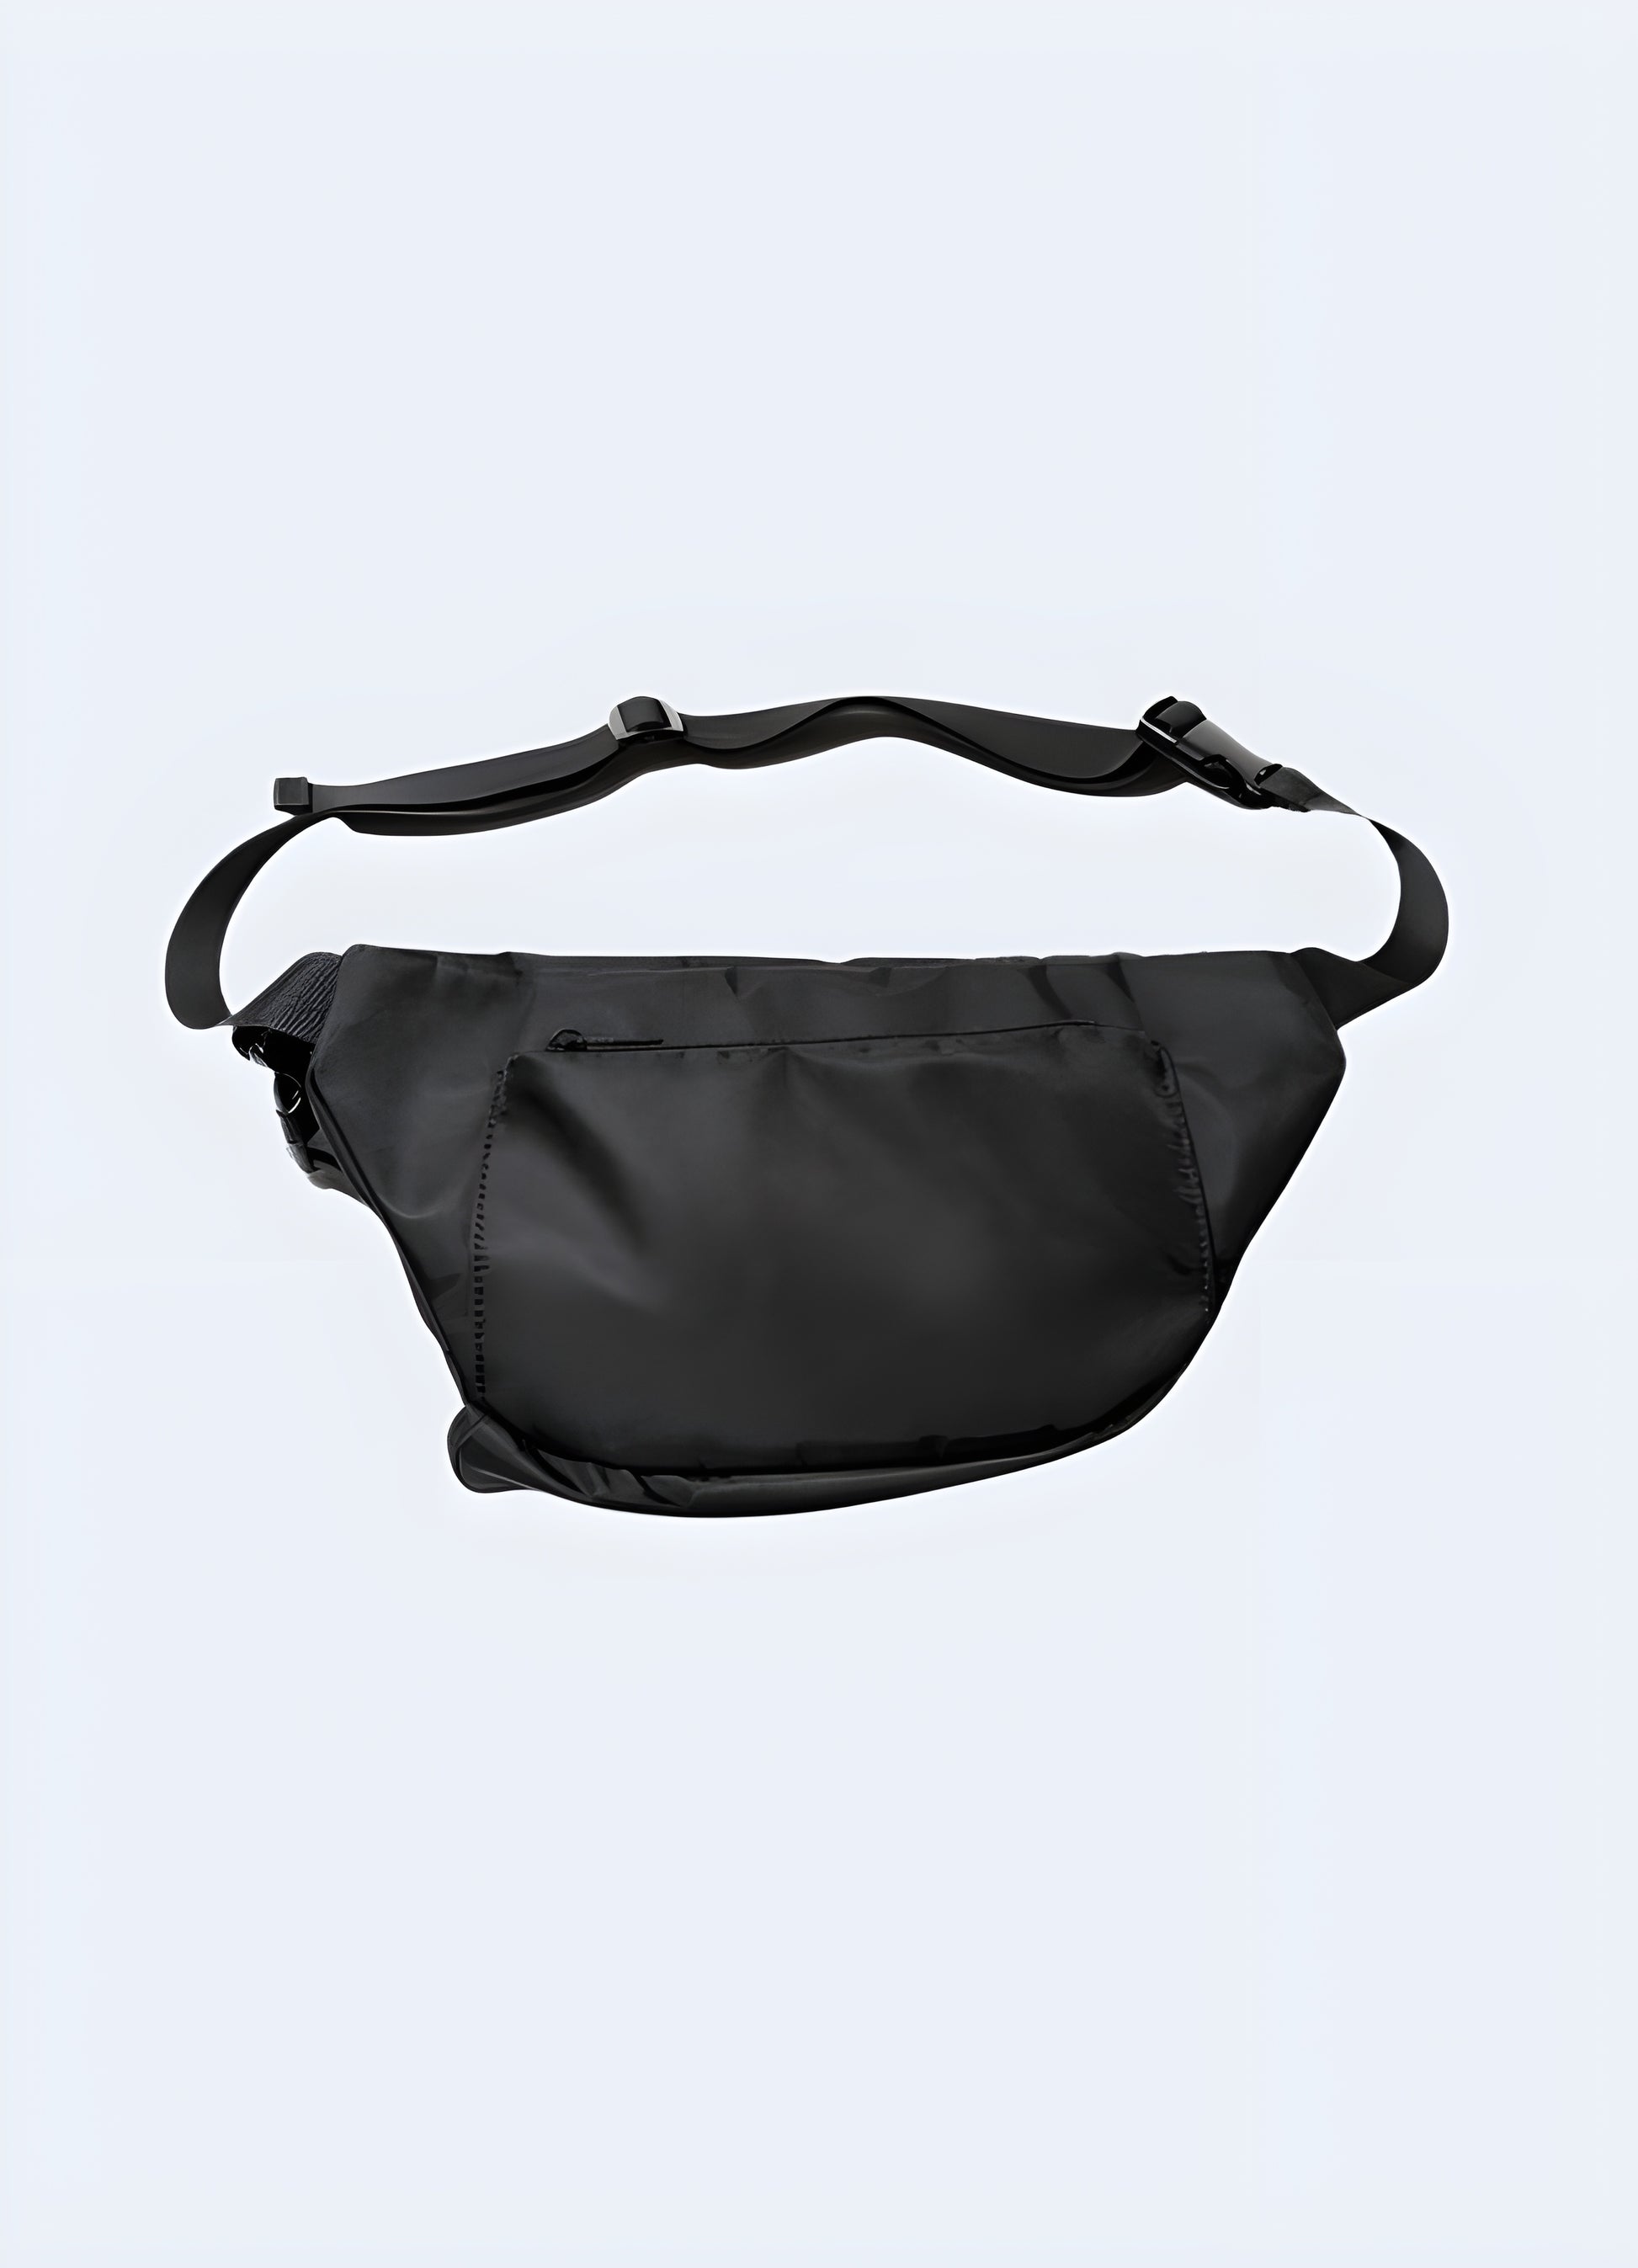 Top zipper closure unisex streetstyle design streetwear crossbody bag.